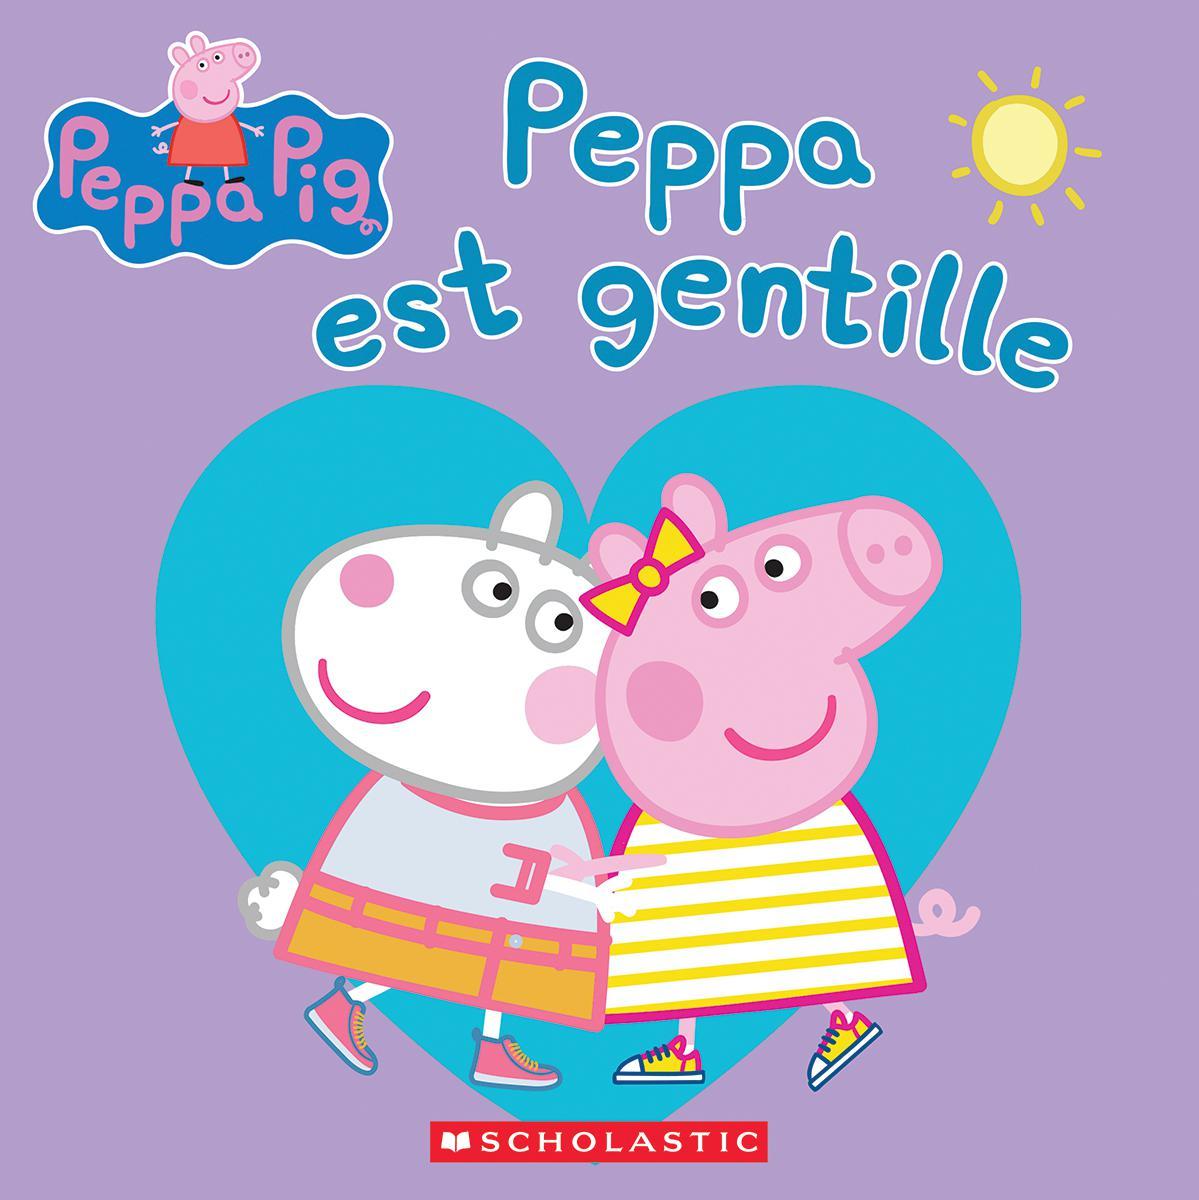  Peppa Pig : Peppa est gentille 